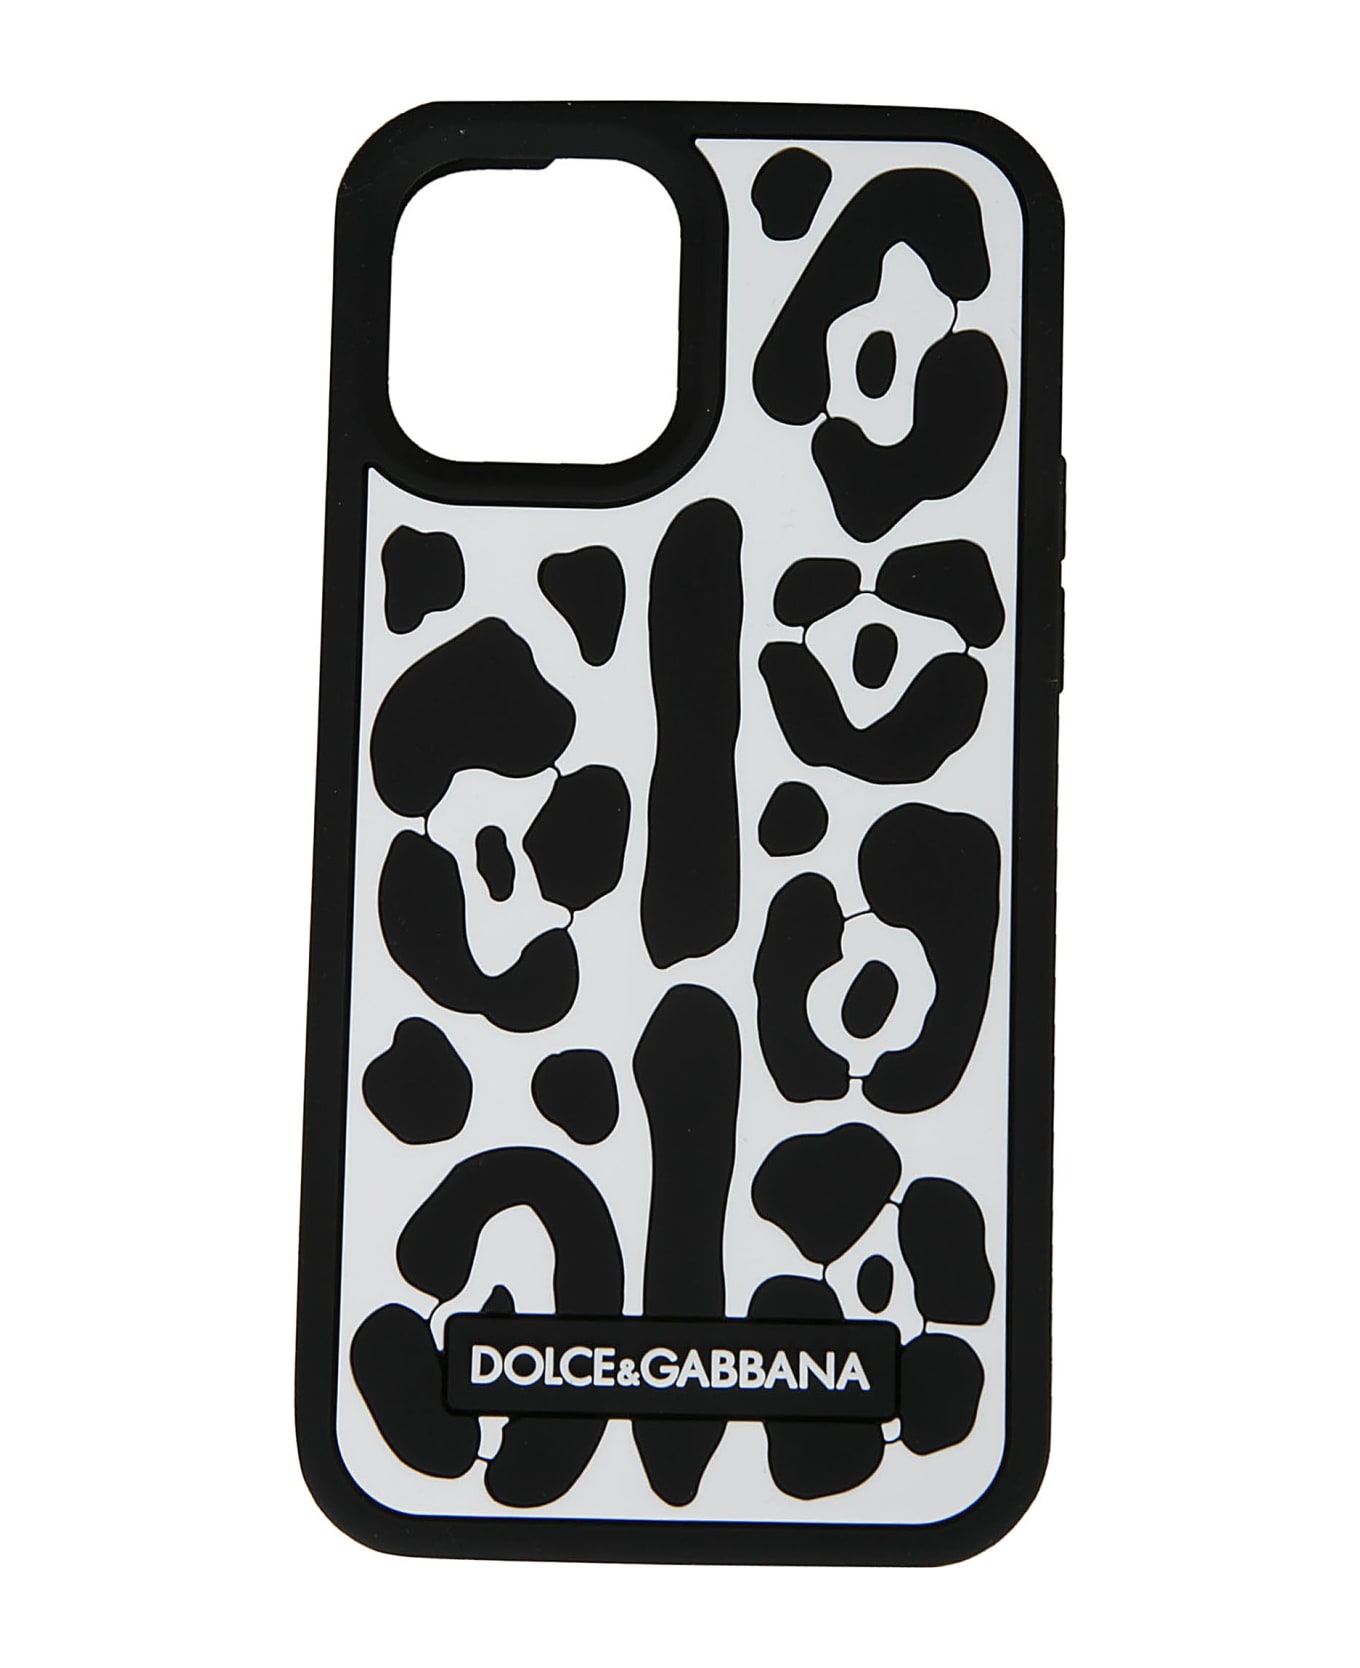 Dolce and & Gabbana Case - White/Black